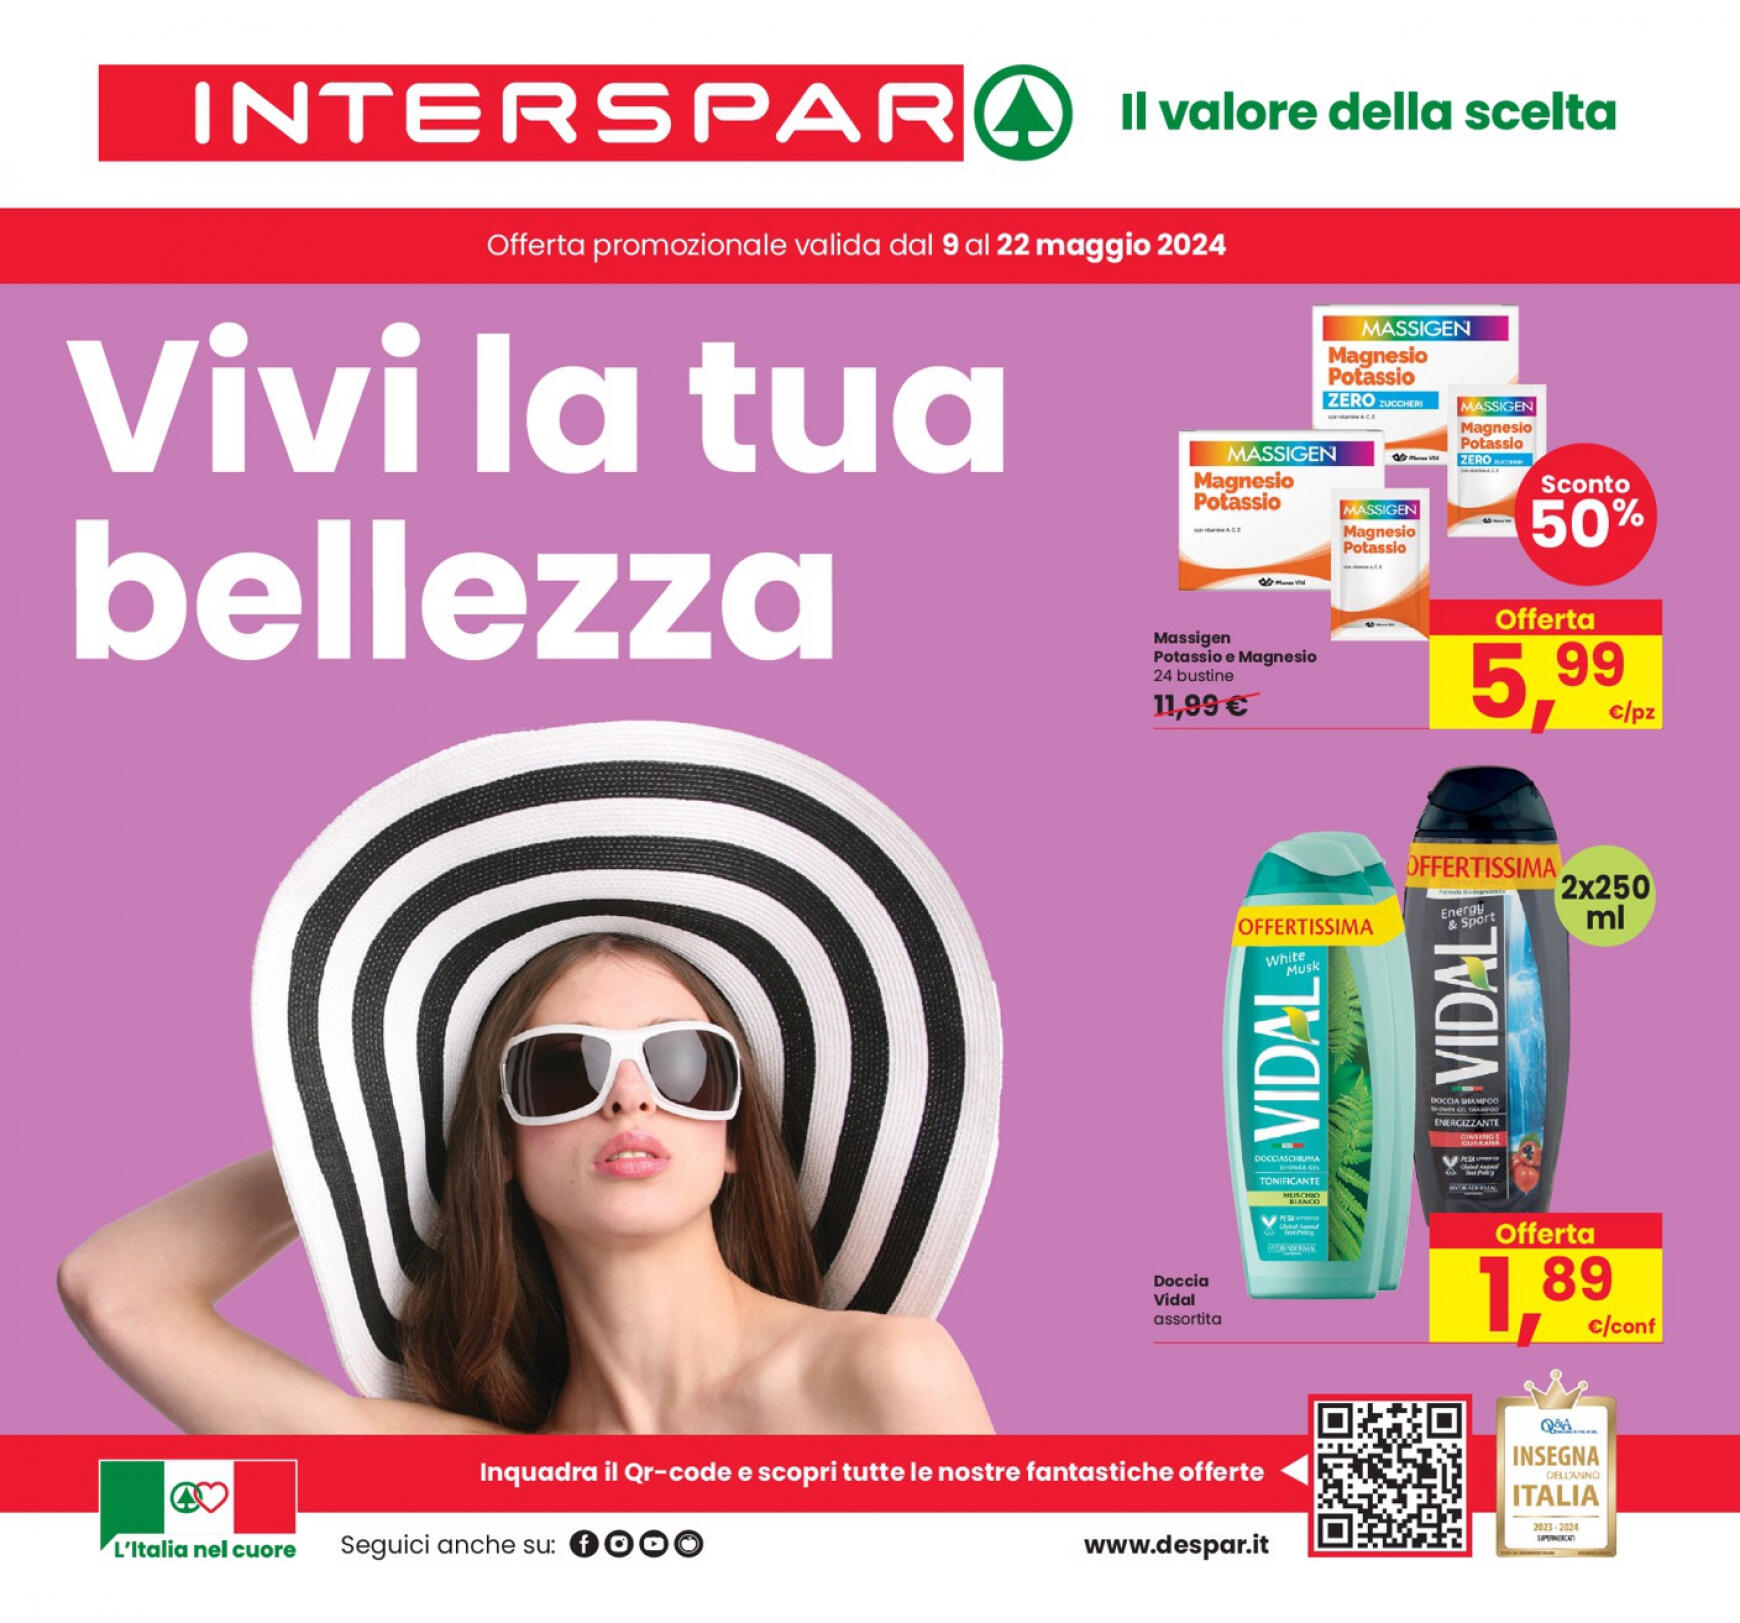 interspar - Nuovo volantino INTERSPAR - Vivi la tua bellezza 09.05. - 22.05.